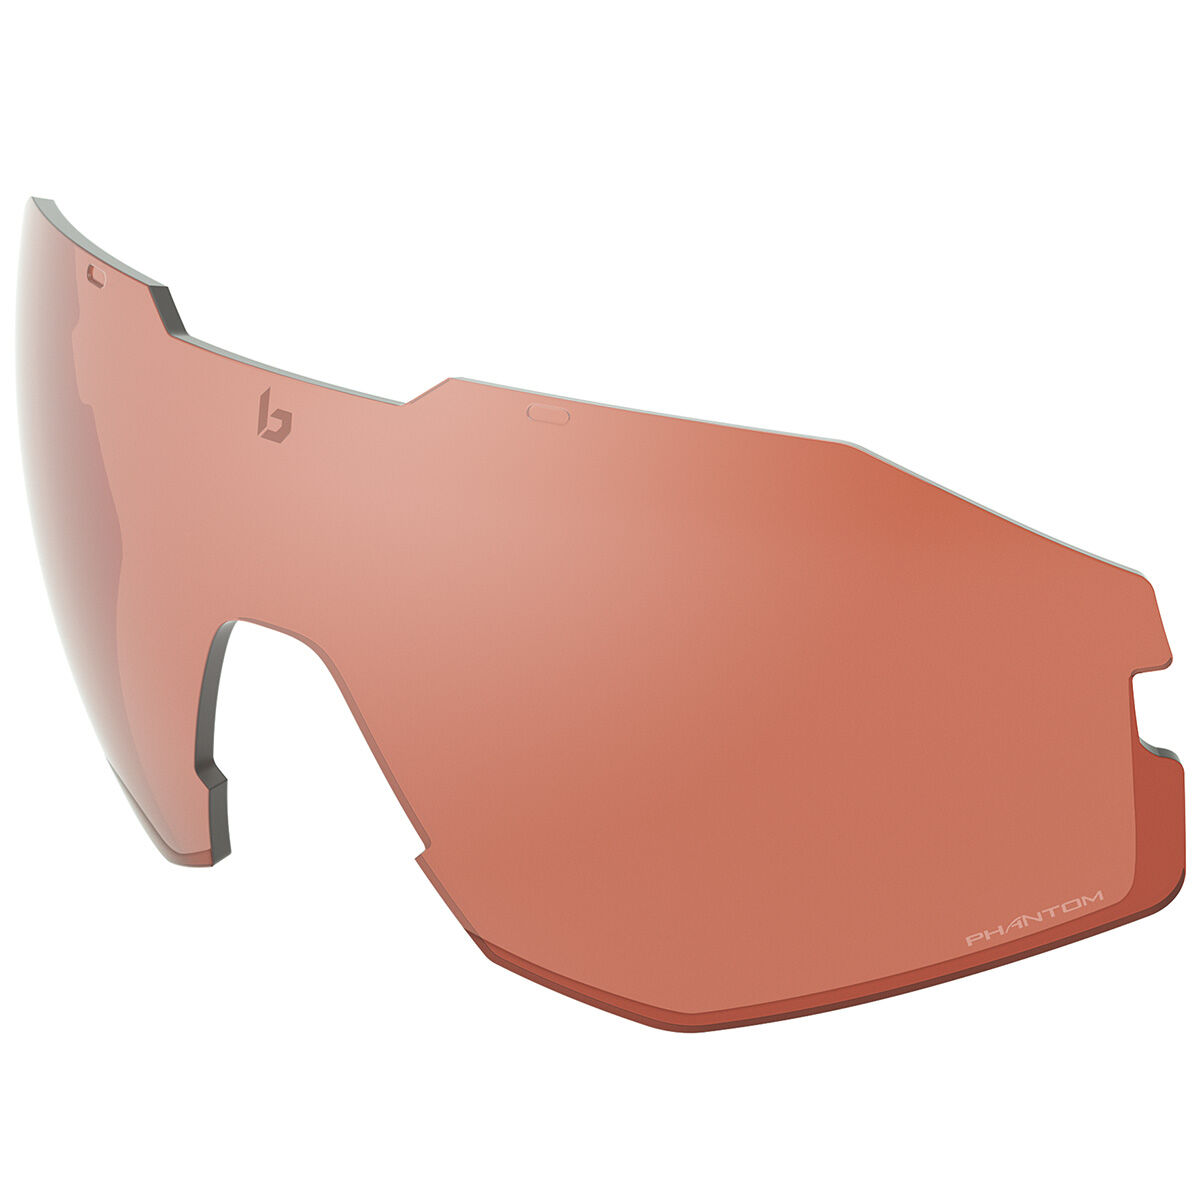 Sunglasses Accessories | Bollé